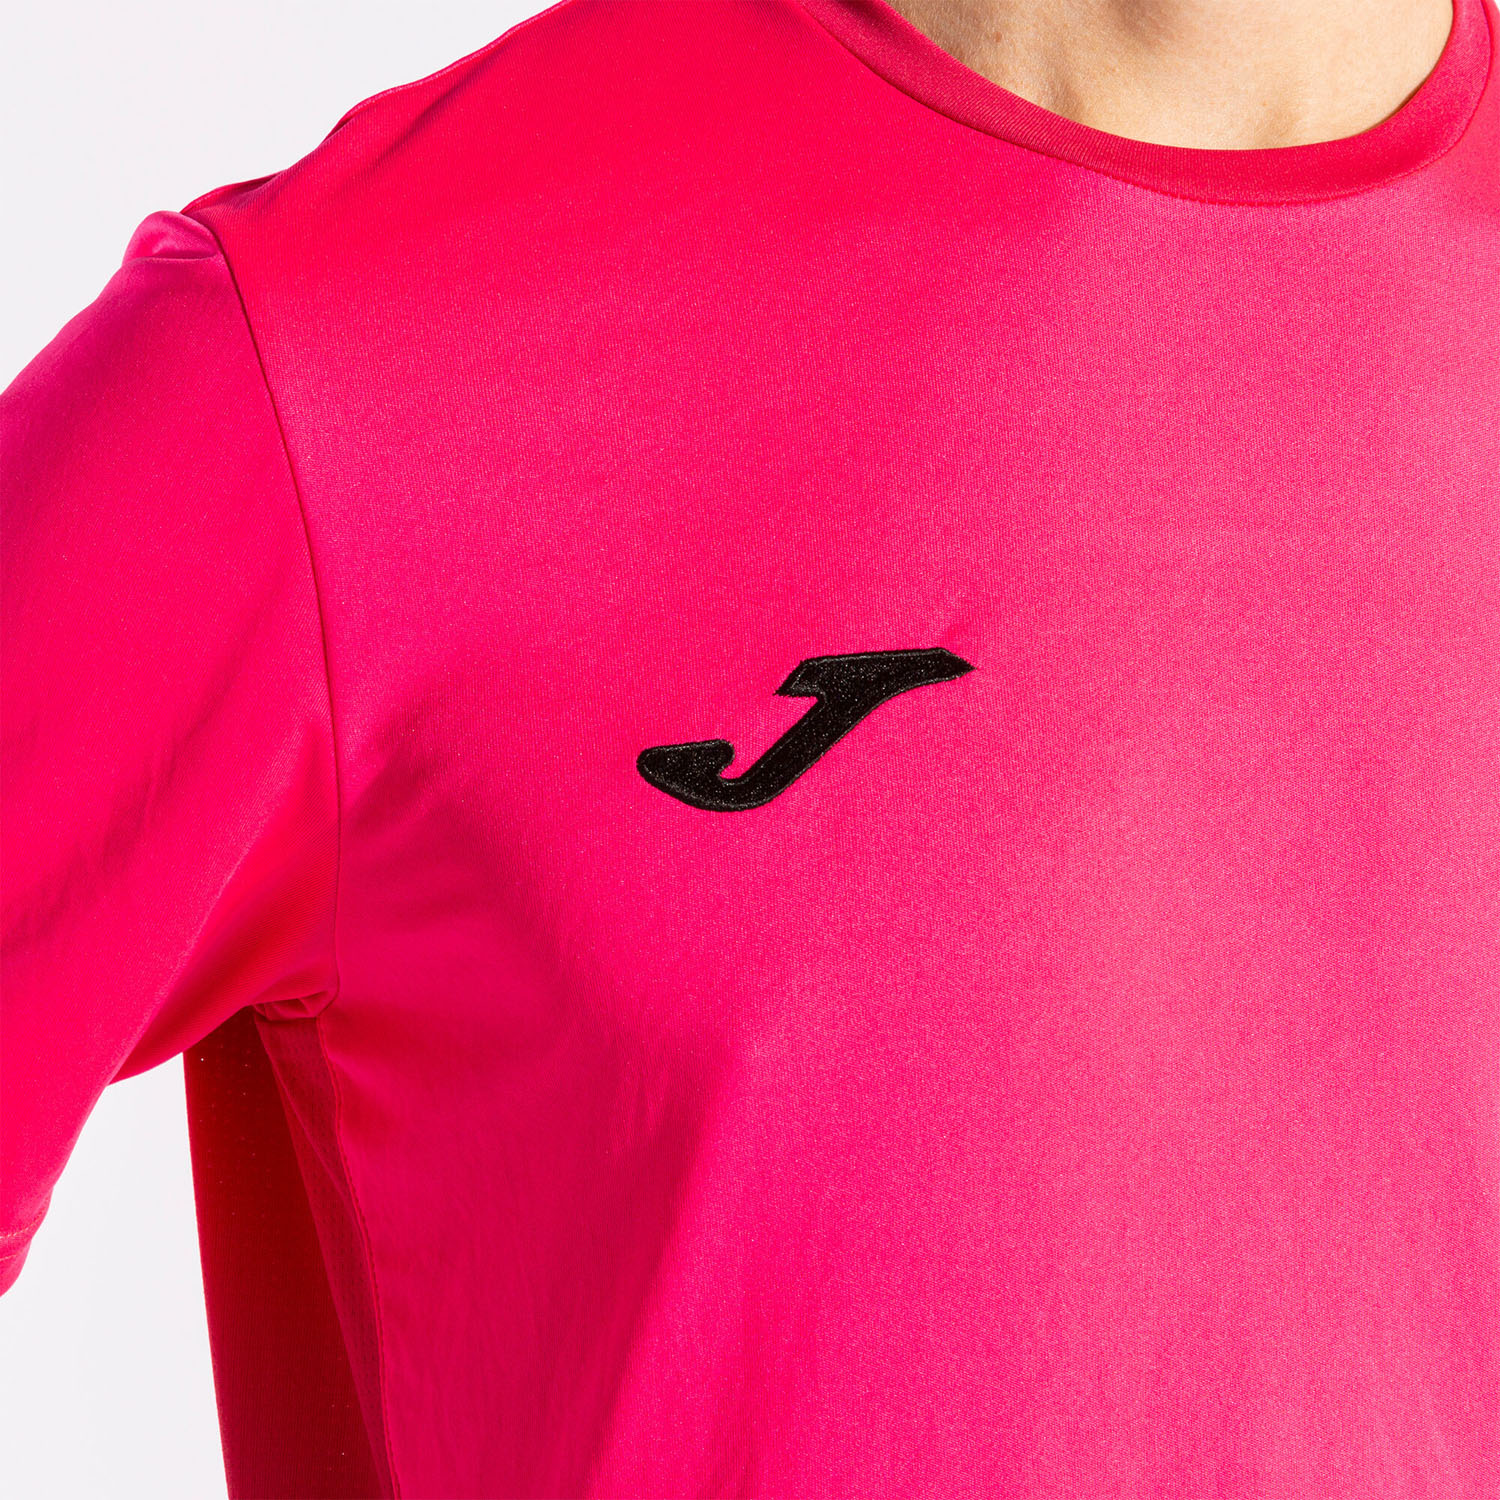 Joma Winner II T-Shirt - Fluor Pink